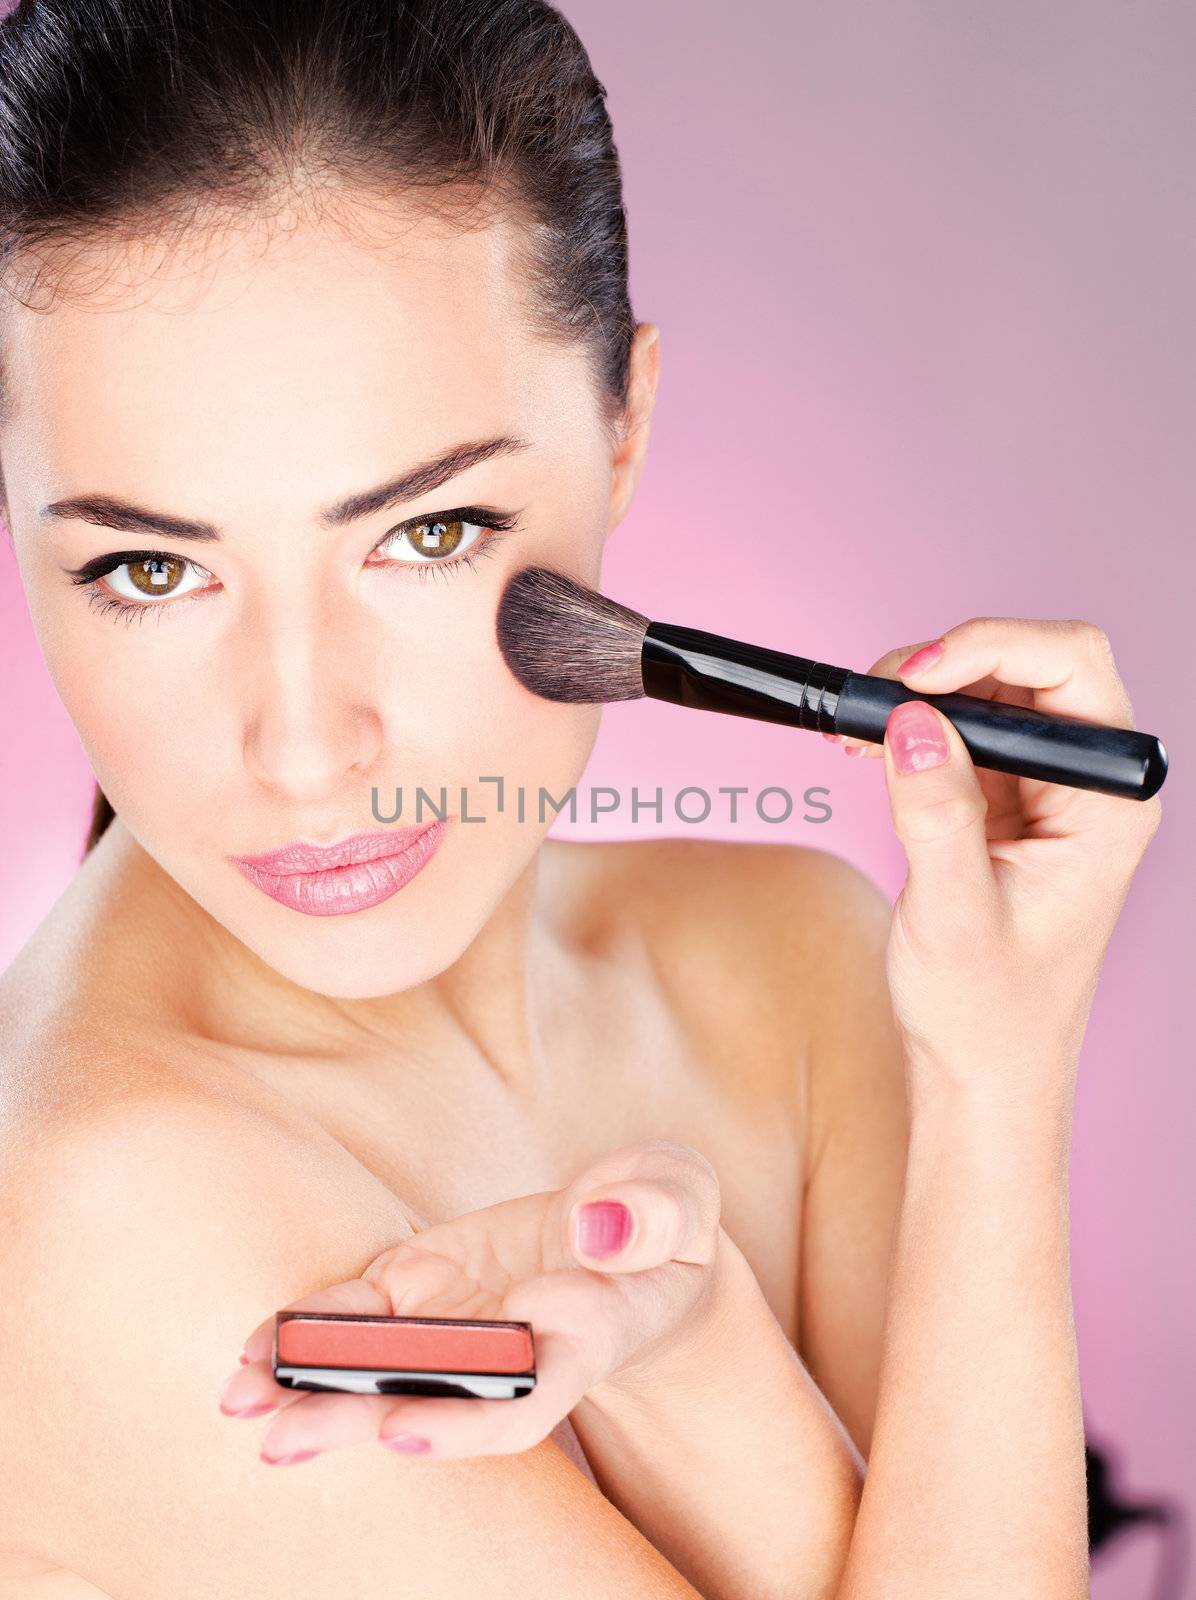 pretty woman applying cosmetic powder brush